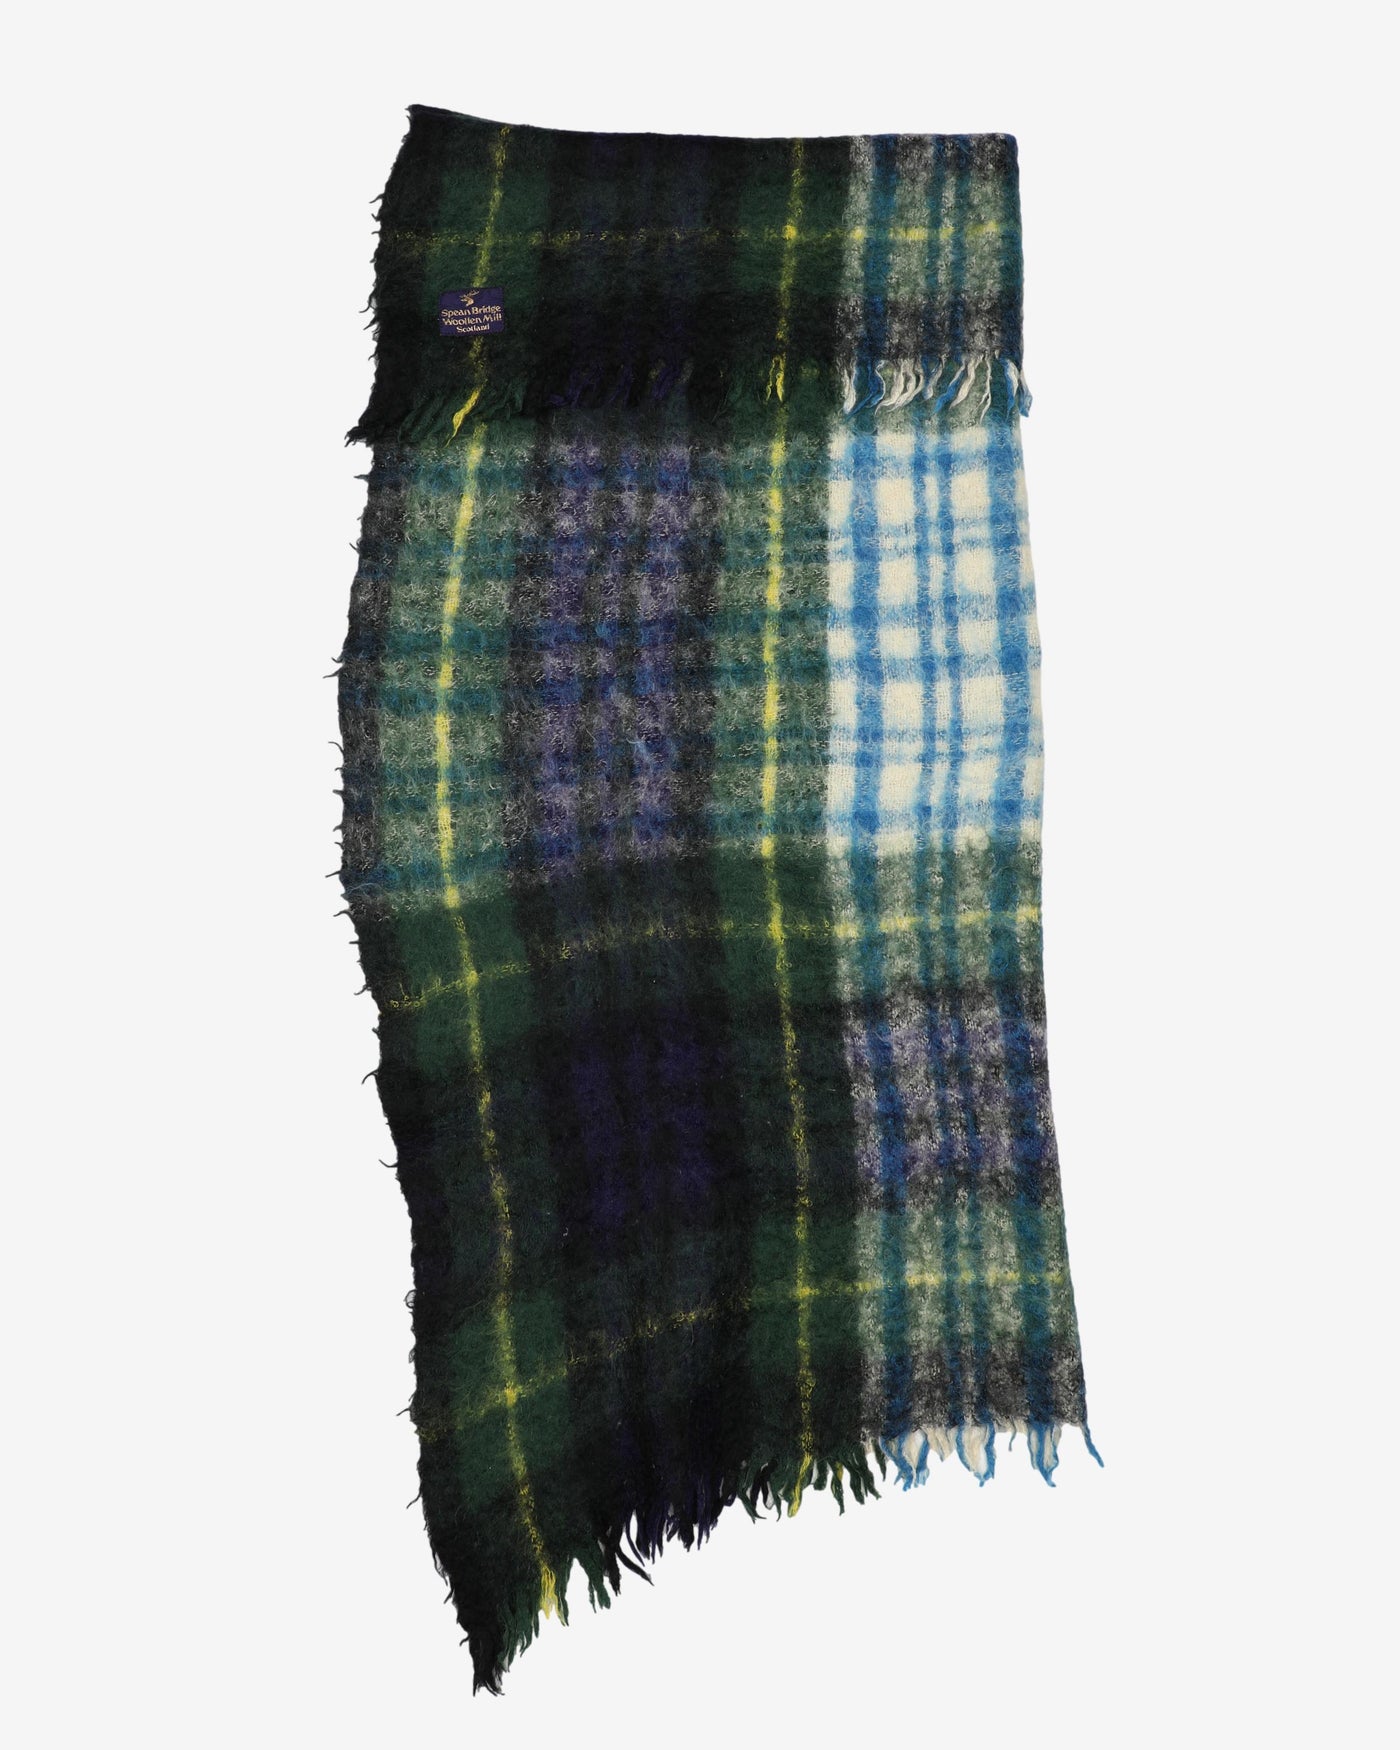 Spean Bridge Woollen Mill Scotland mohair throw shawl